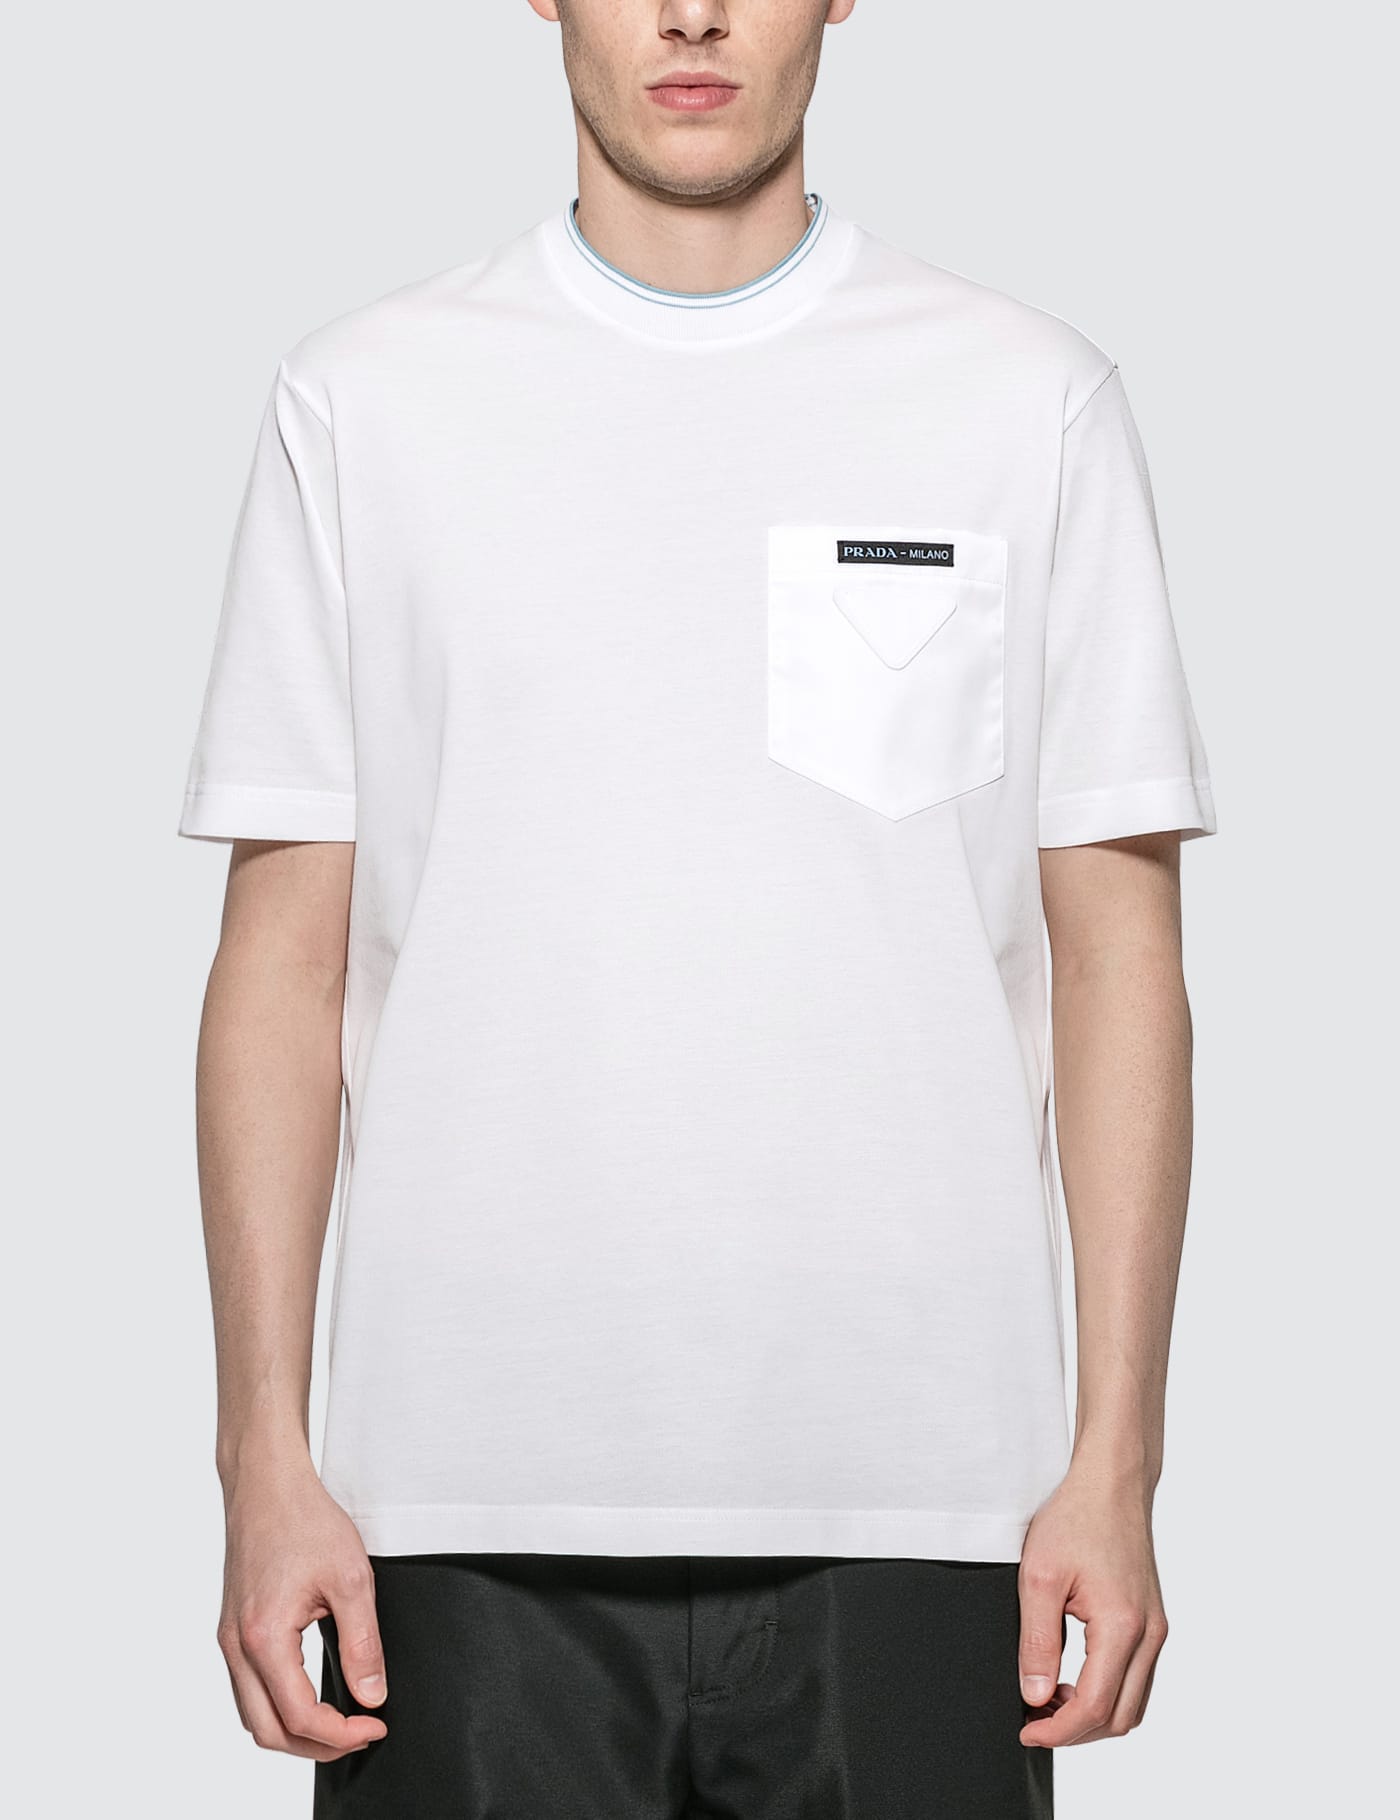 Prada - Logo Pocket T-Shirt | HBX - Globally Curated Fashion and 